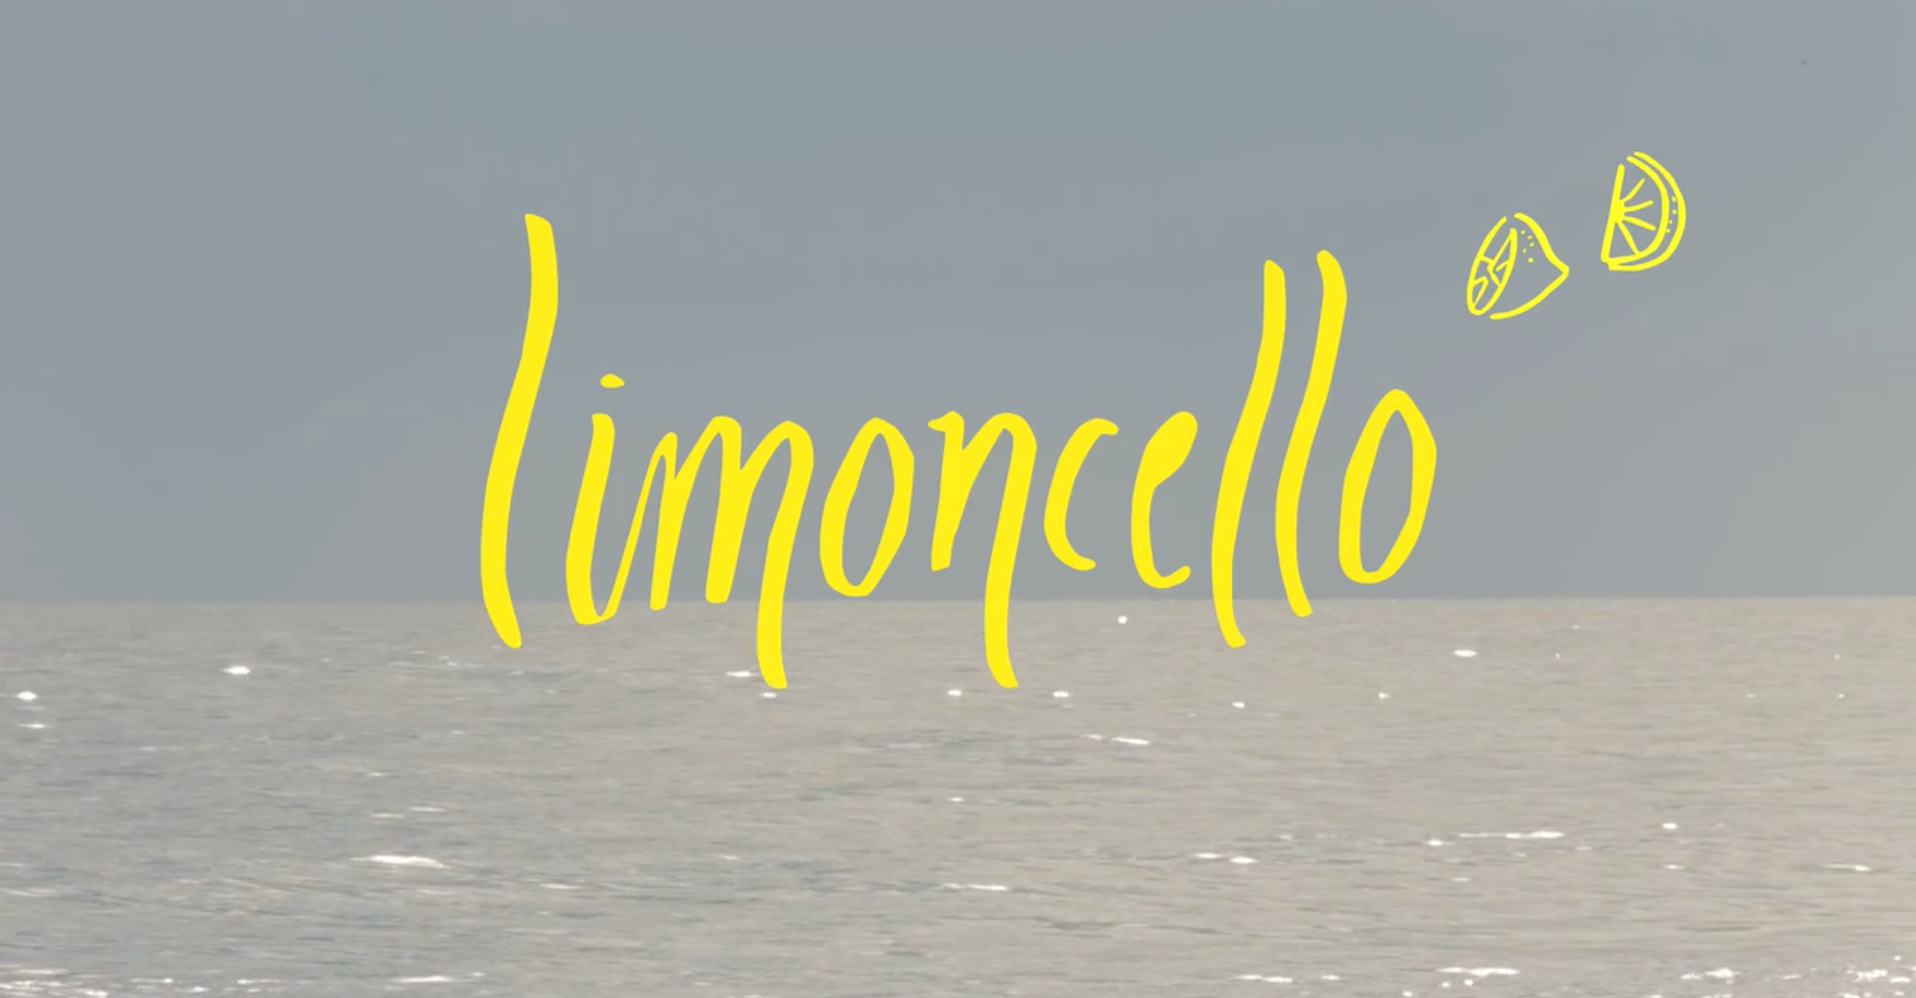 Limoncello | A Surfing Film